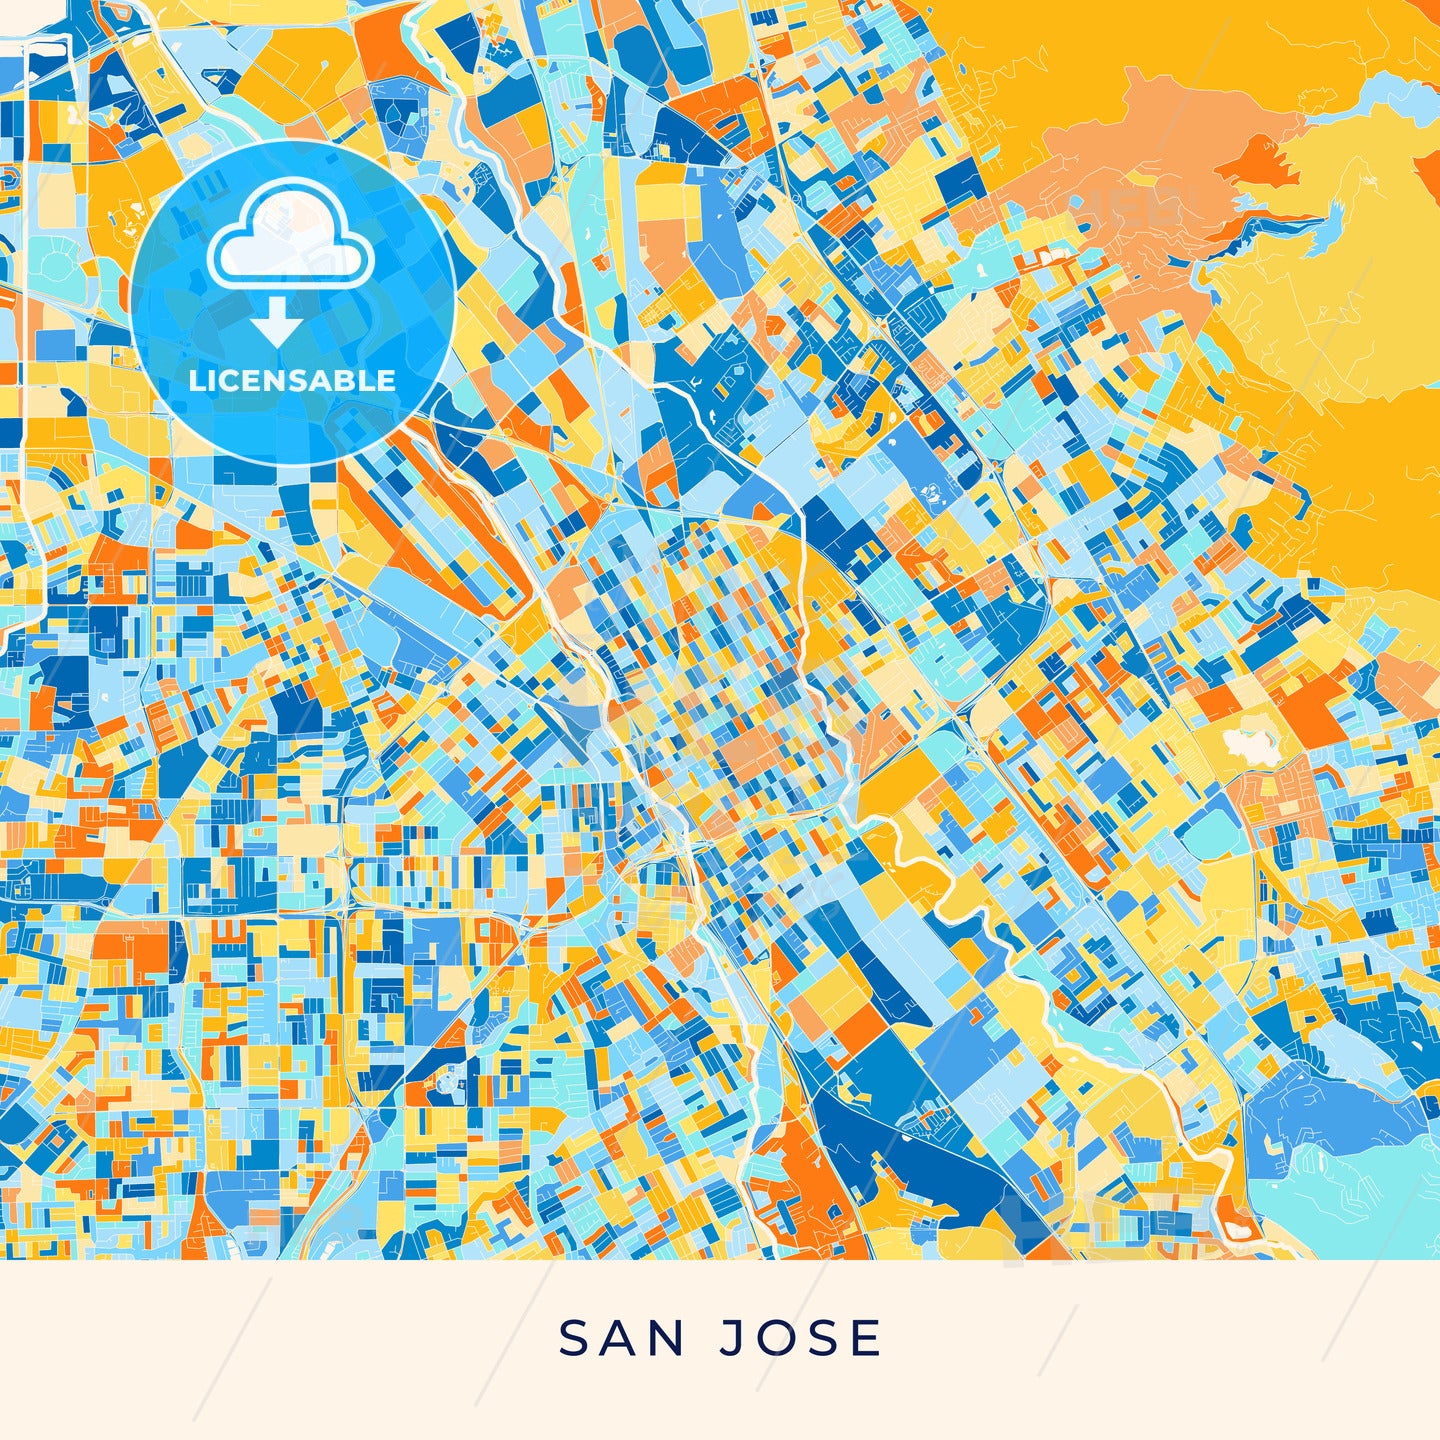 San Jose colorful map poster template